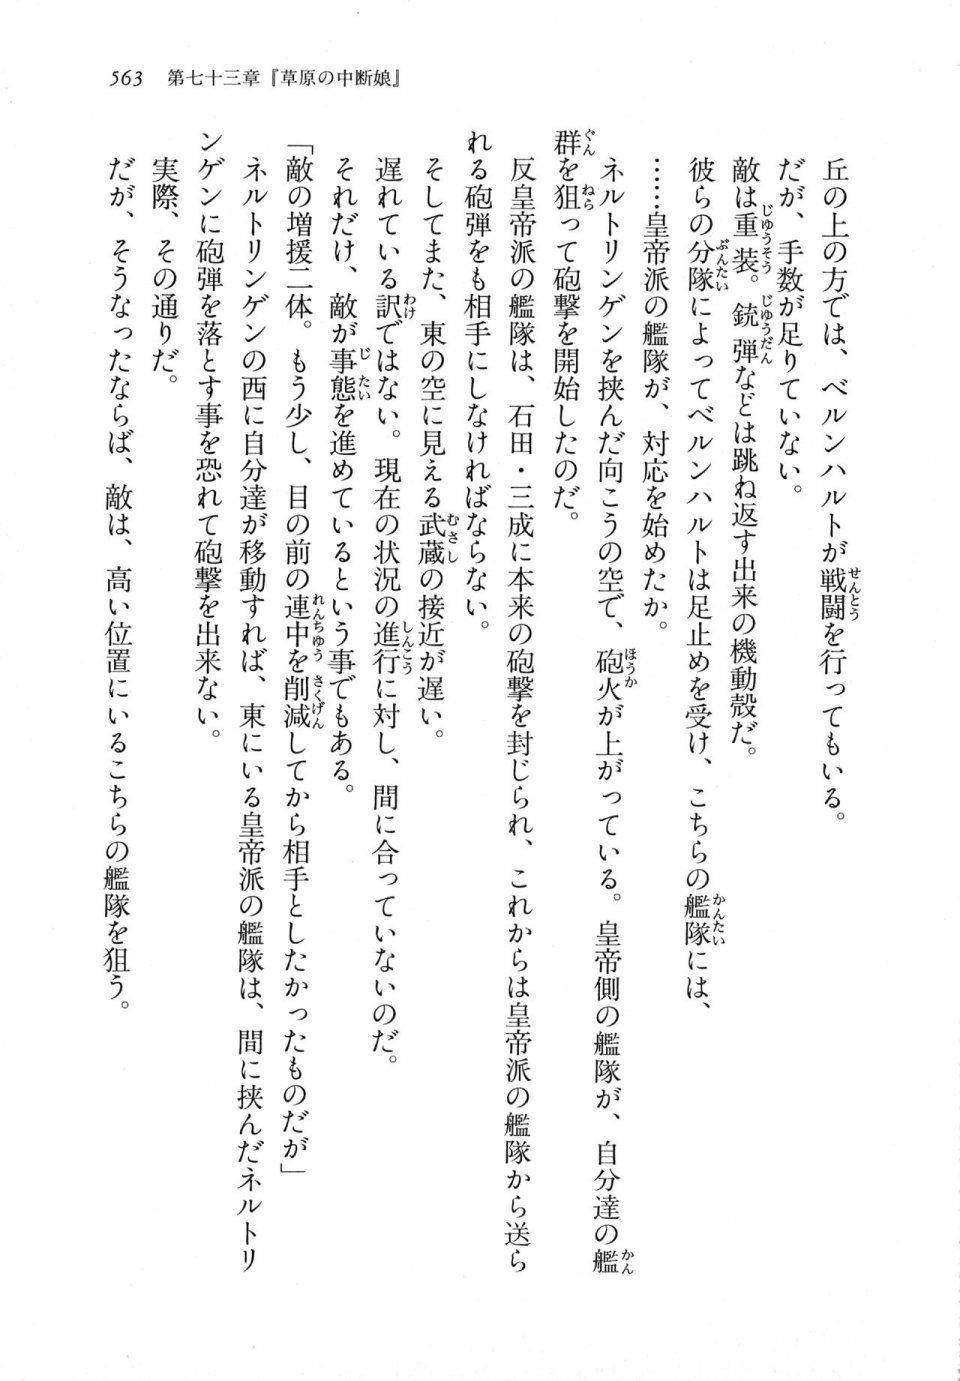 Kyoukai Senjou no Horizon LN Vol 18(7C) Part 2 - Photo #3